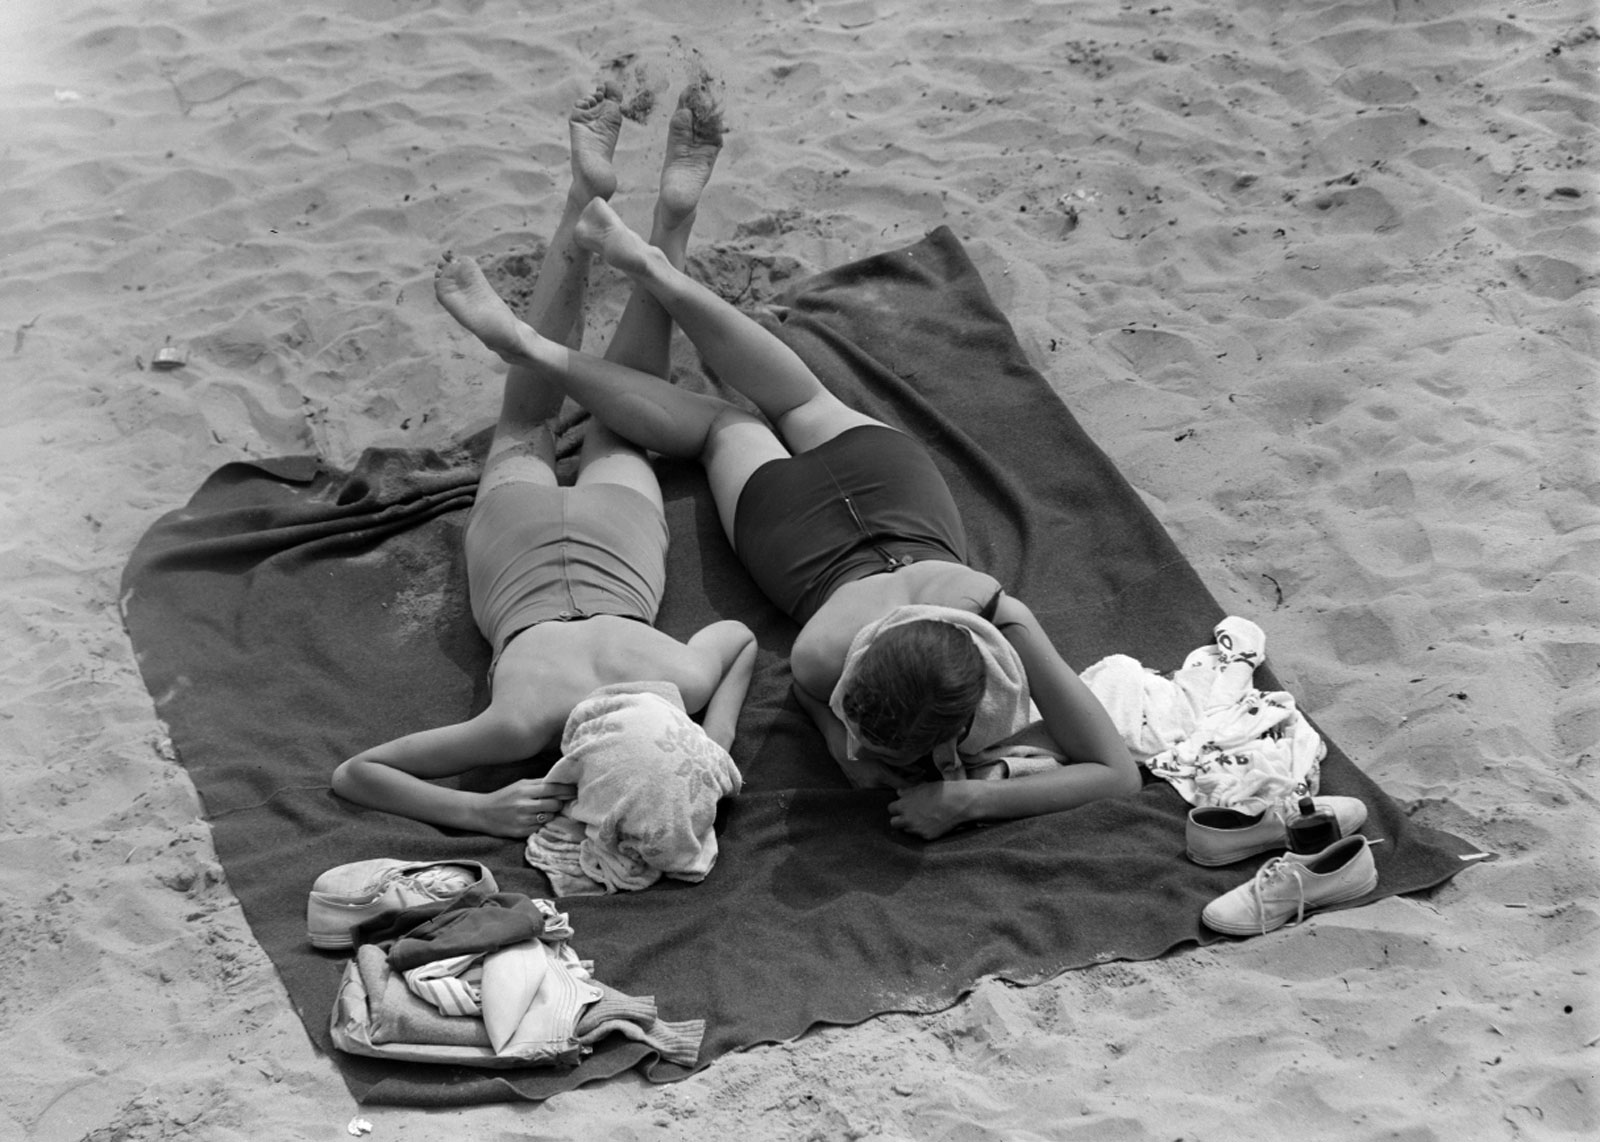 Two girls sunbathing at the beach.